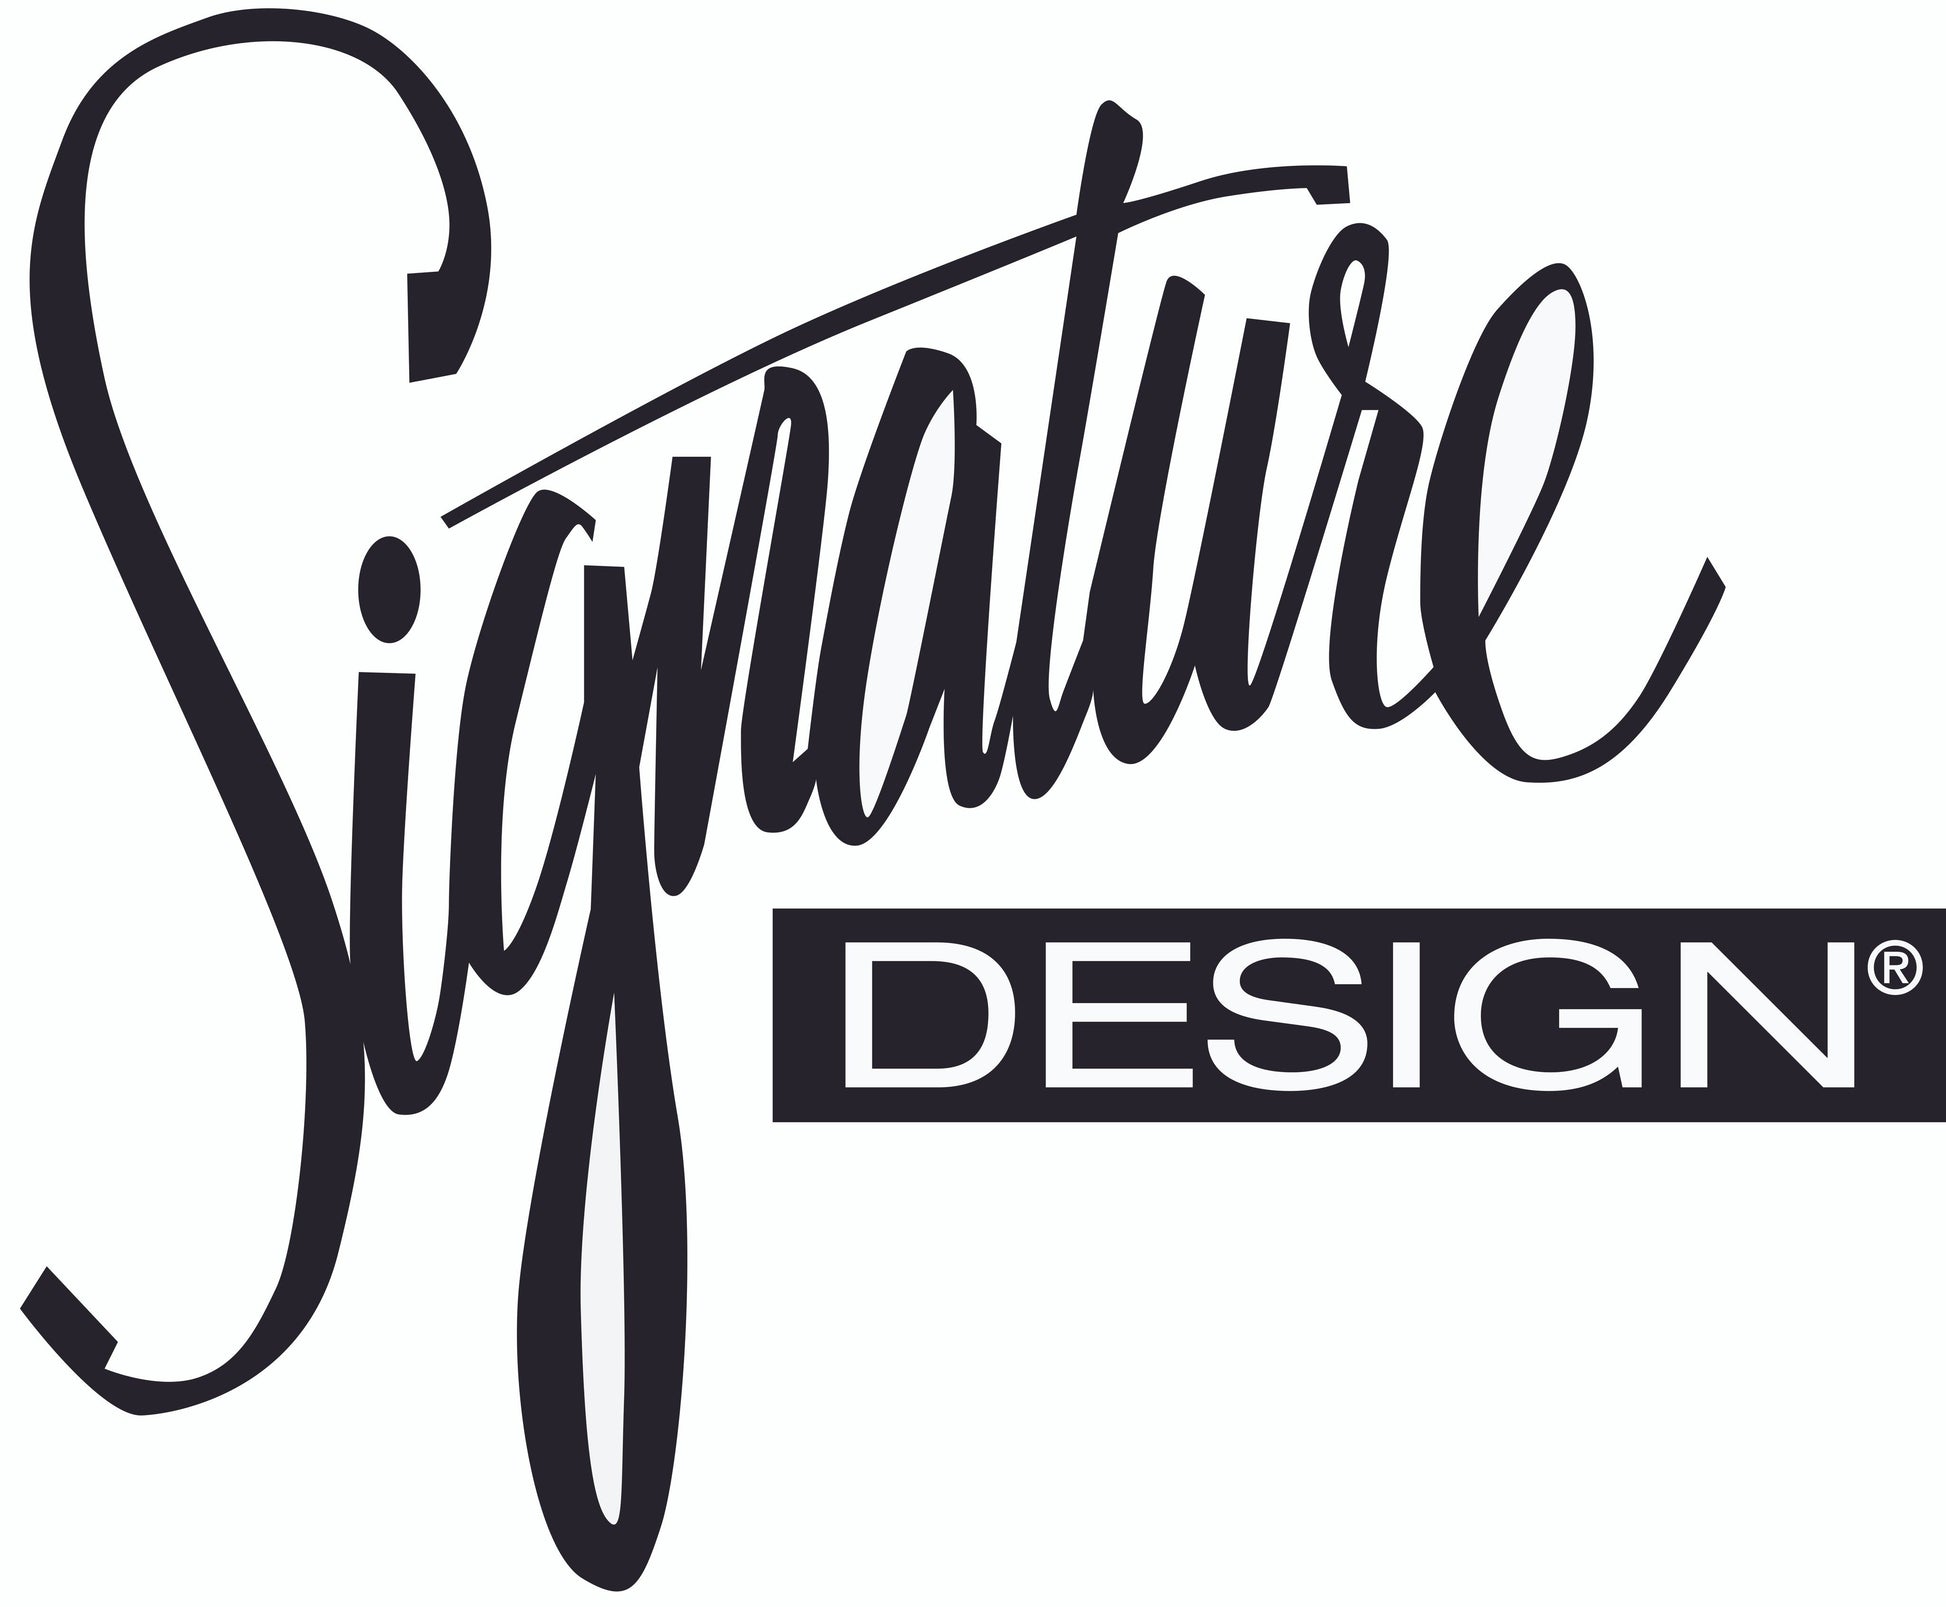 Jaycott Next-Gen Nuvella Pillow Signature Design by Ashley®